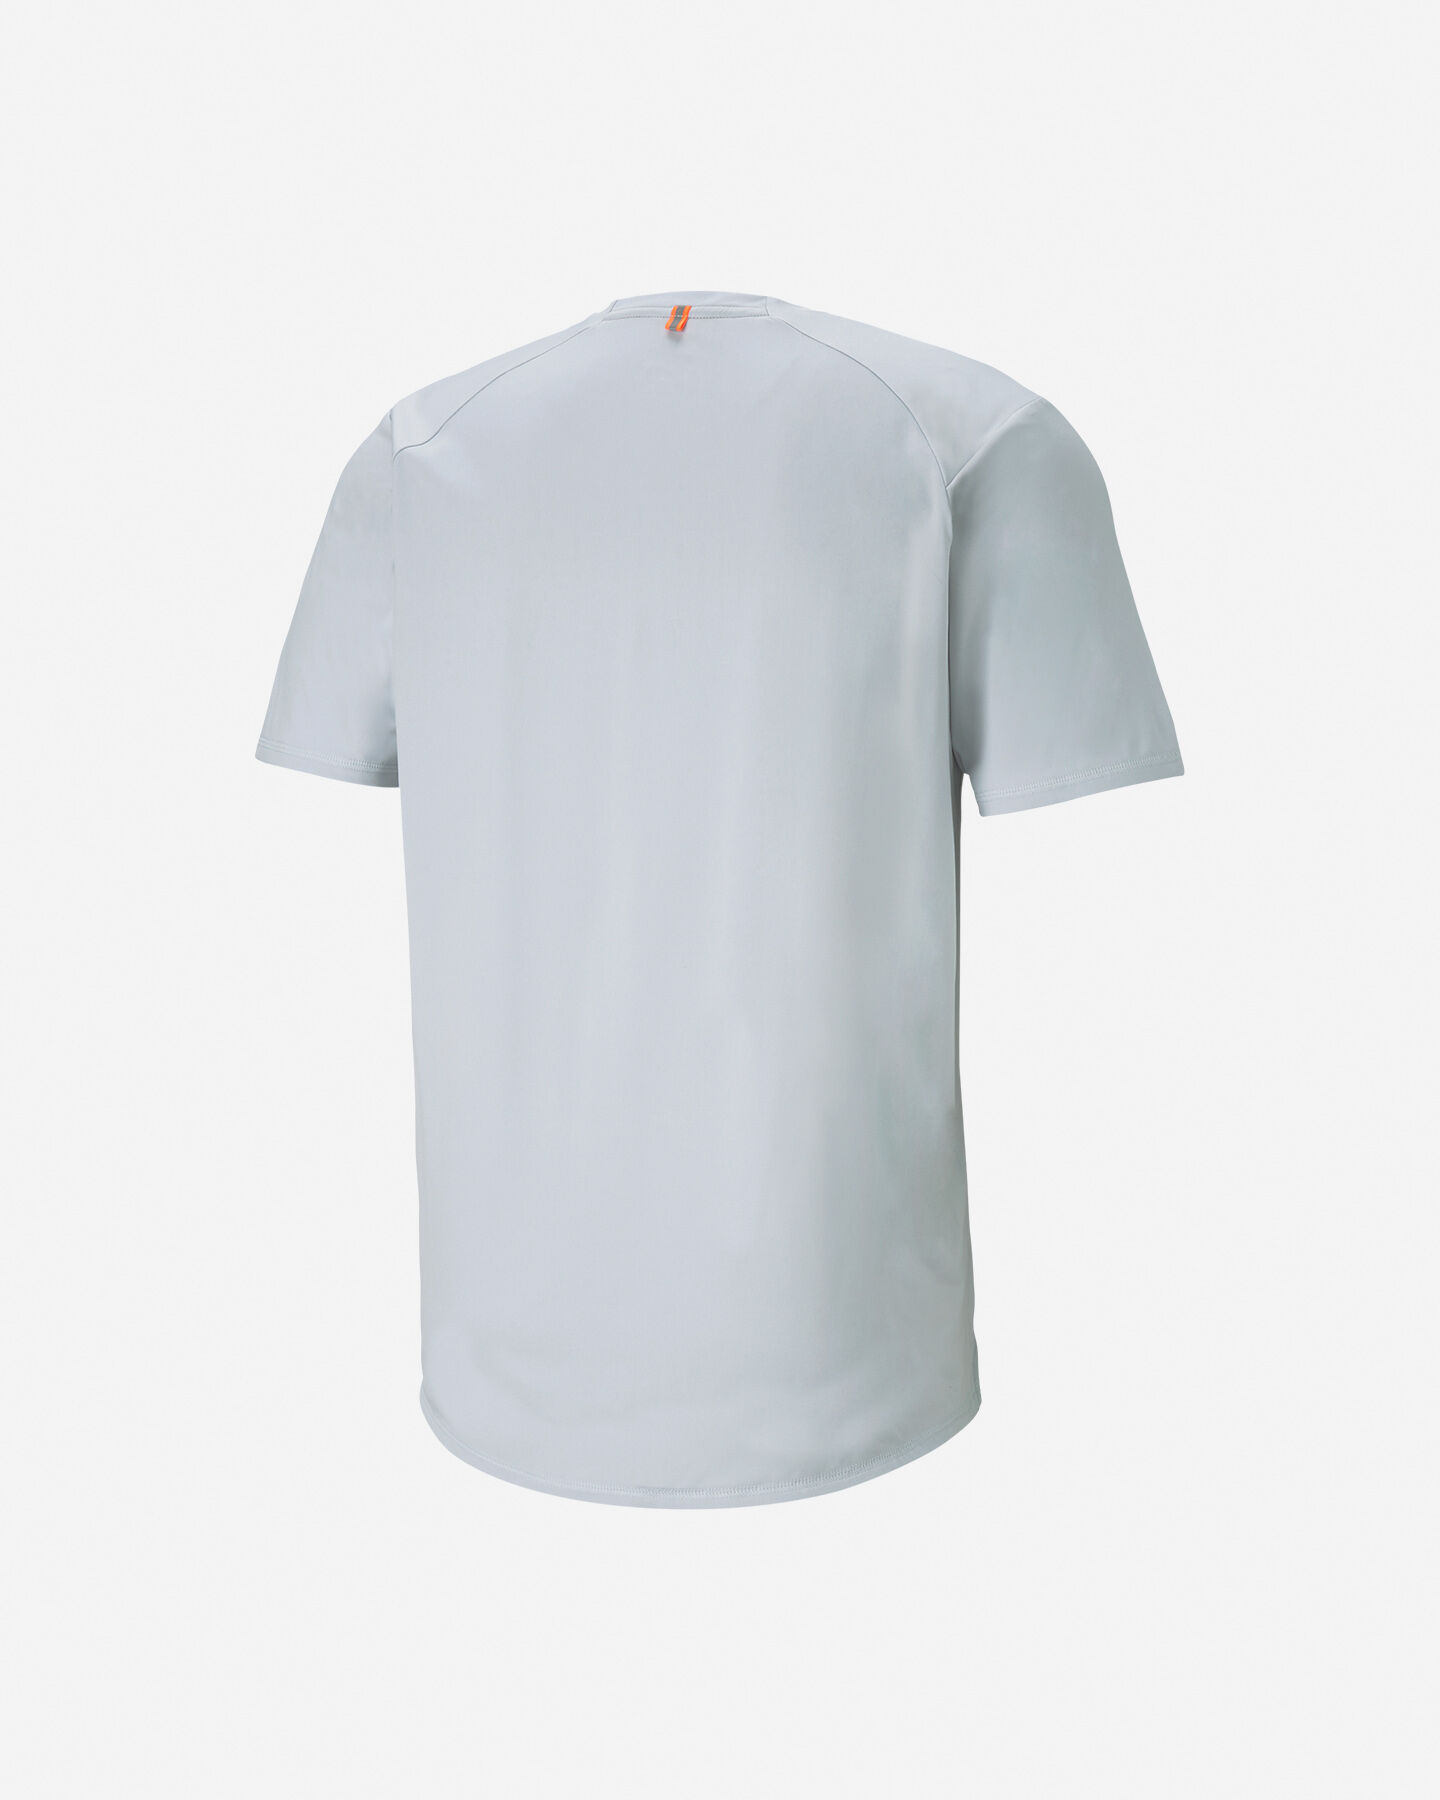  T-Shirt running PUMA RUN LAUNCH COOLADAPT M S5283834 scatto 1